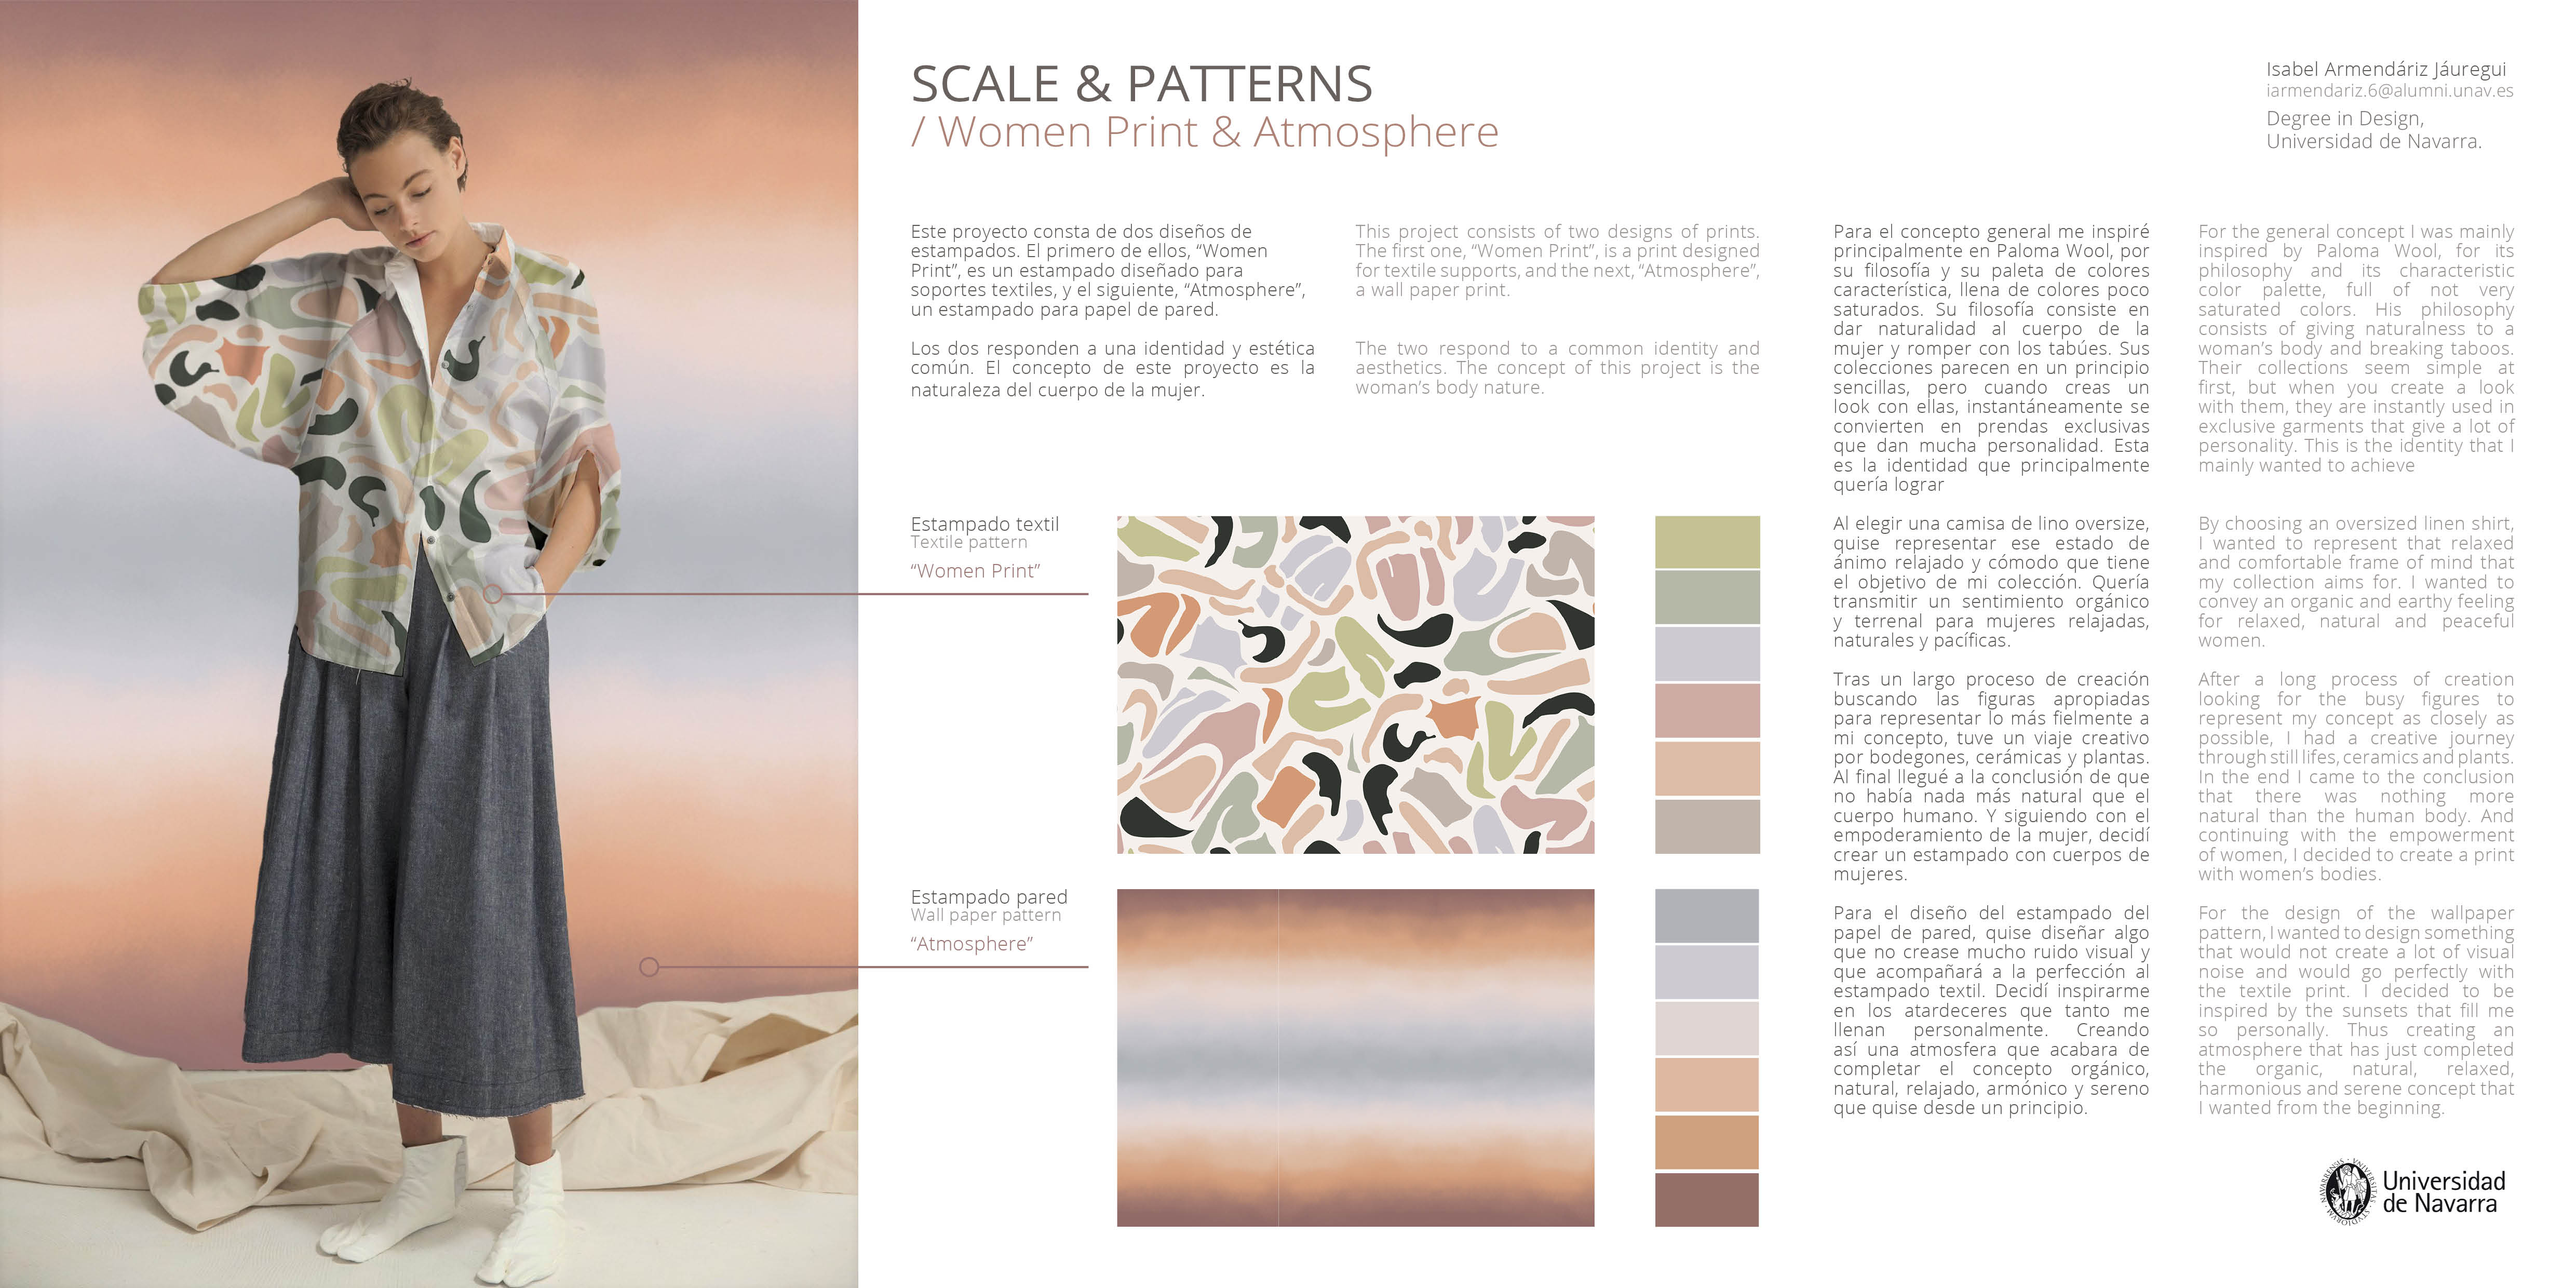 Scale & Patterns / Women Print & Atmosphere by Isabel Armendariz Jauregui - Creative Work